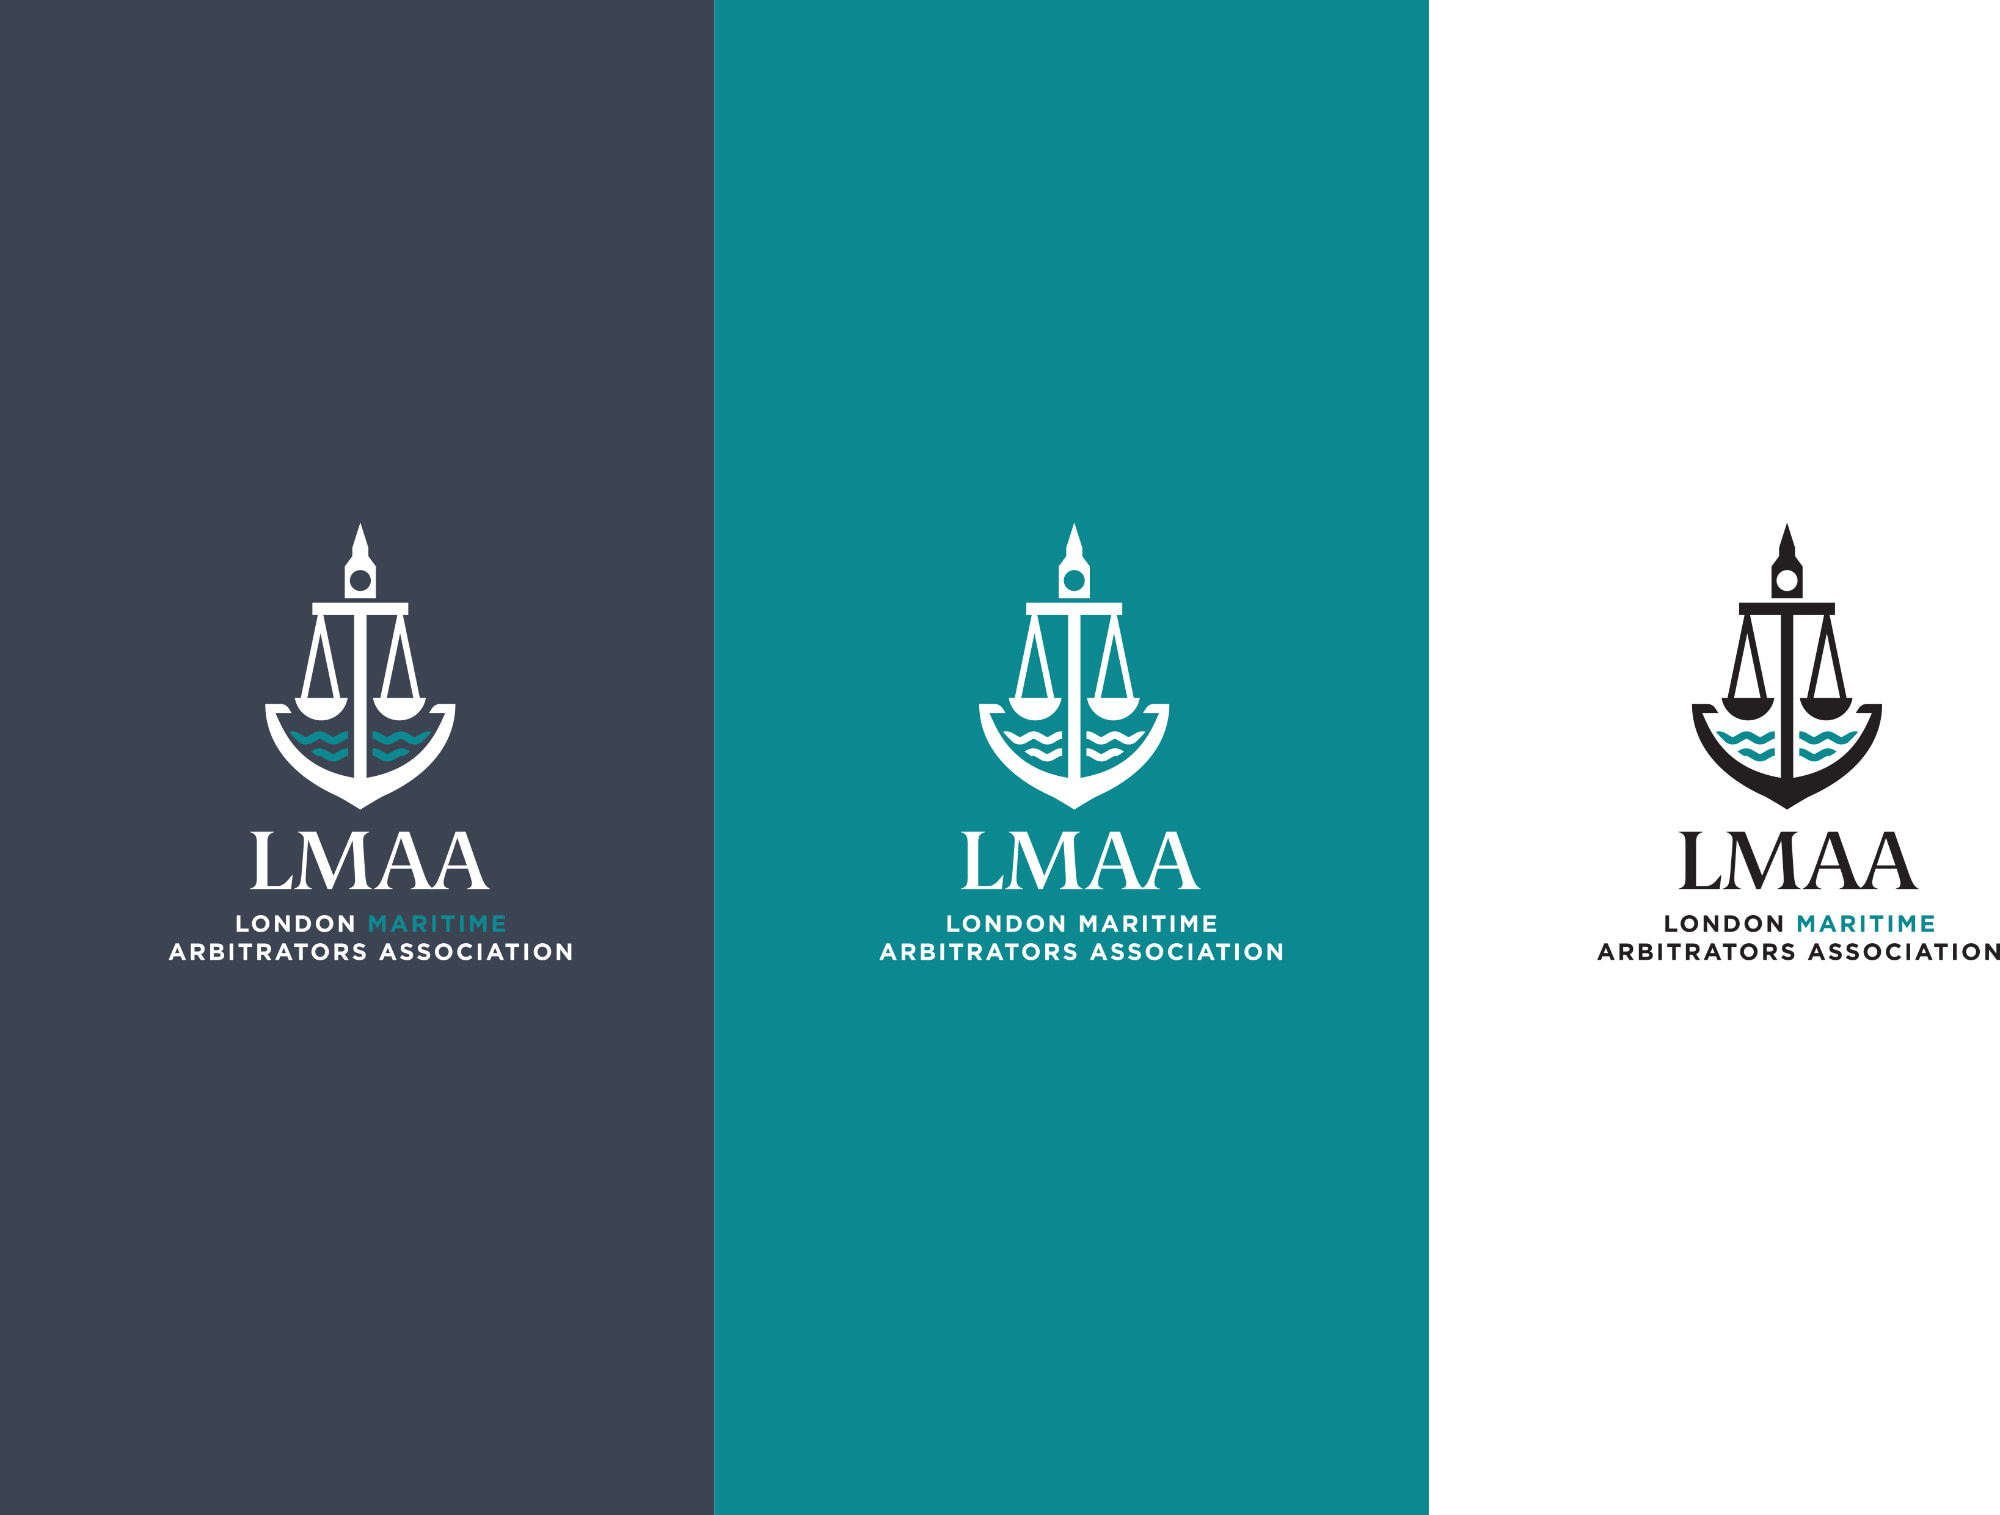 LMAA visual identity concept